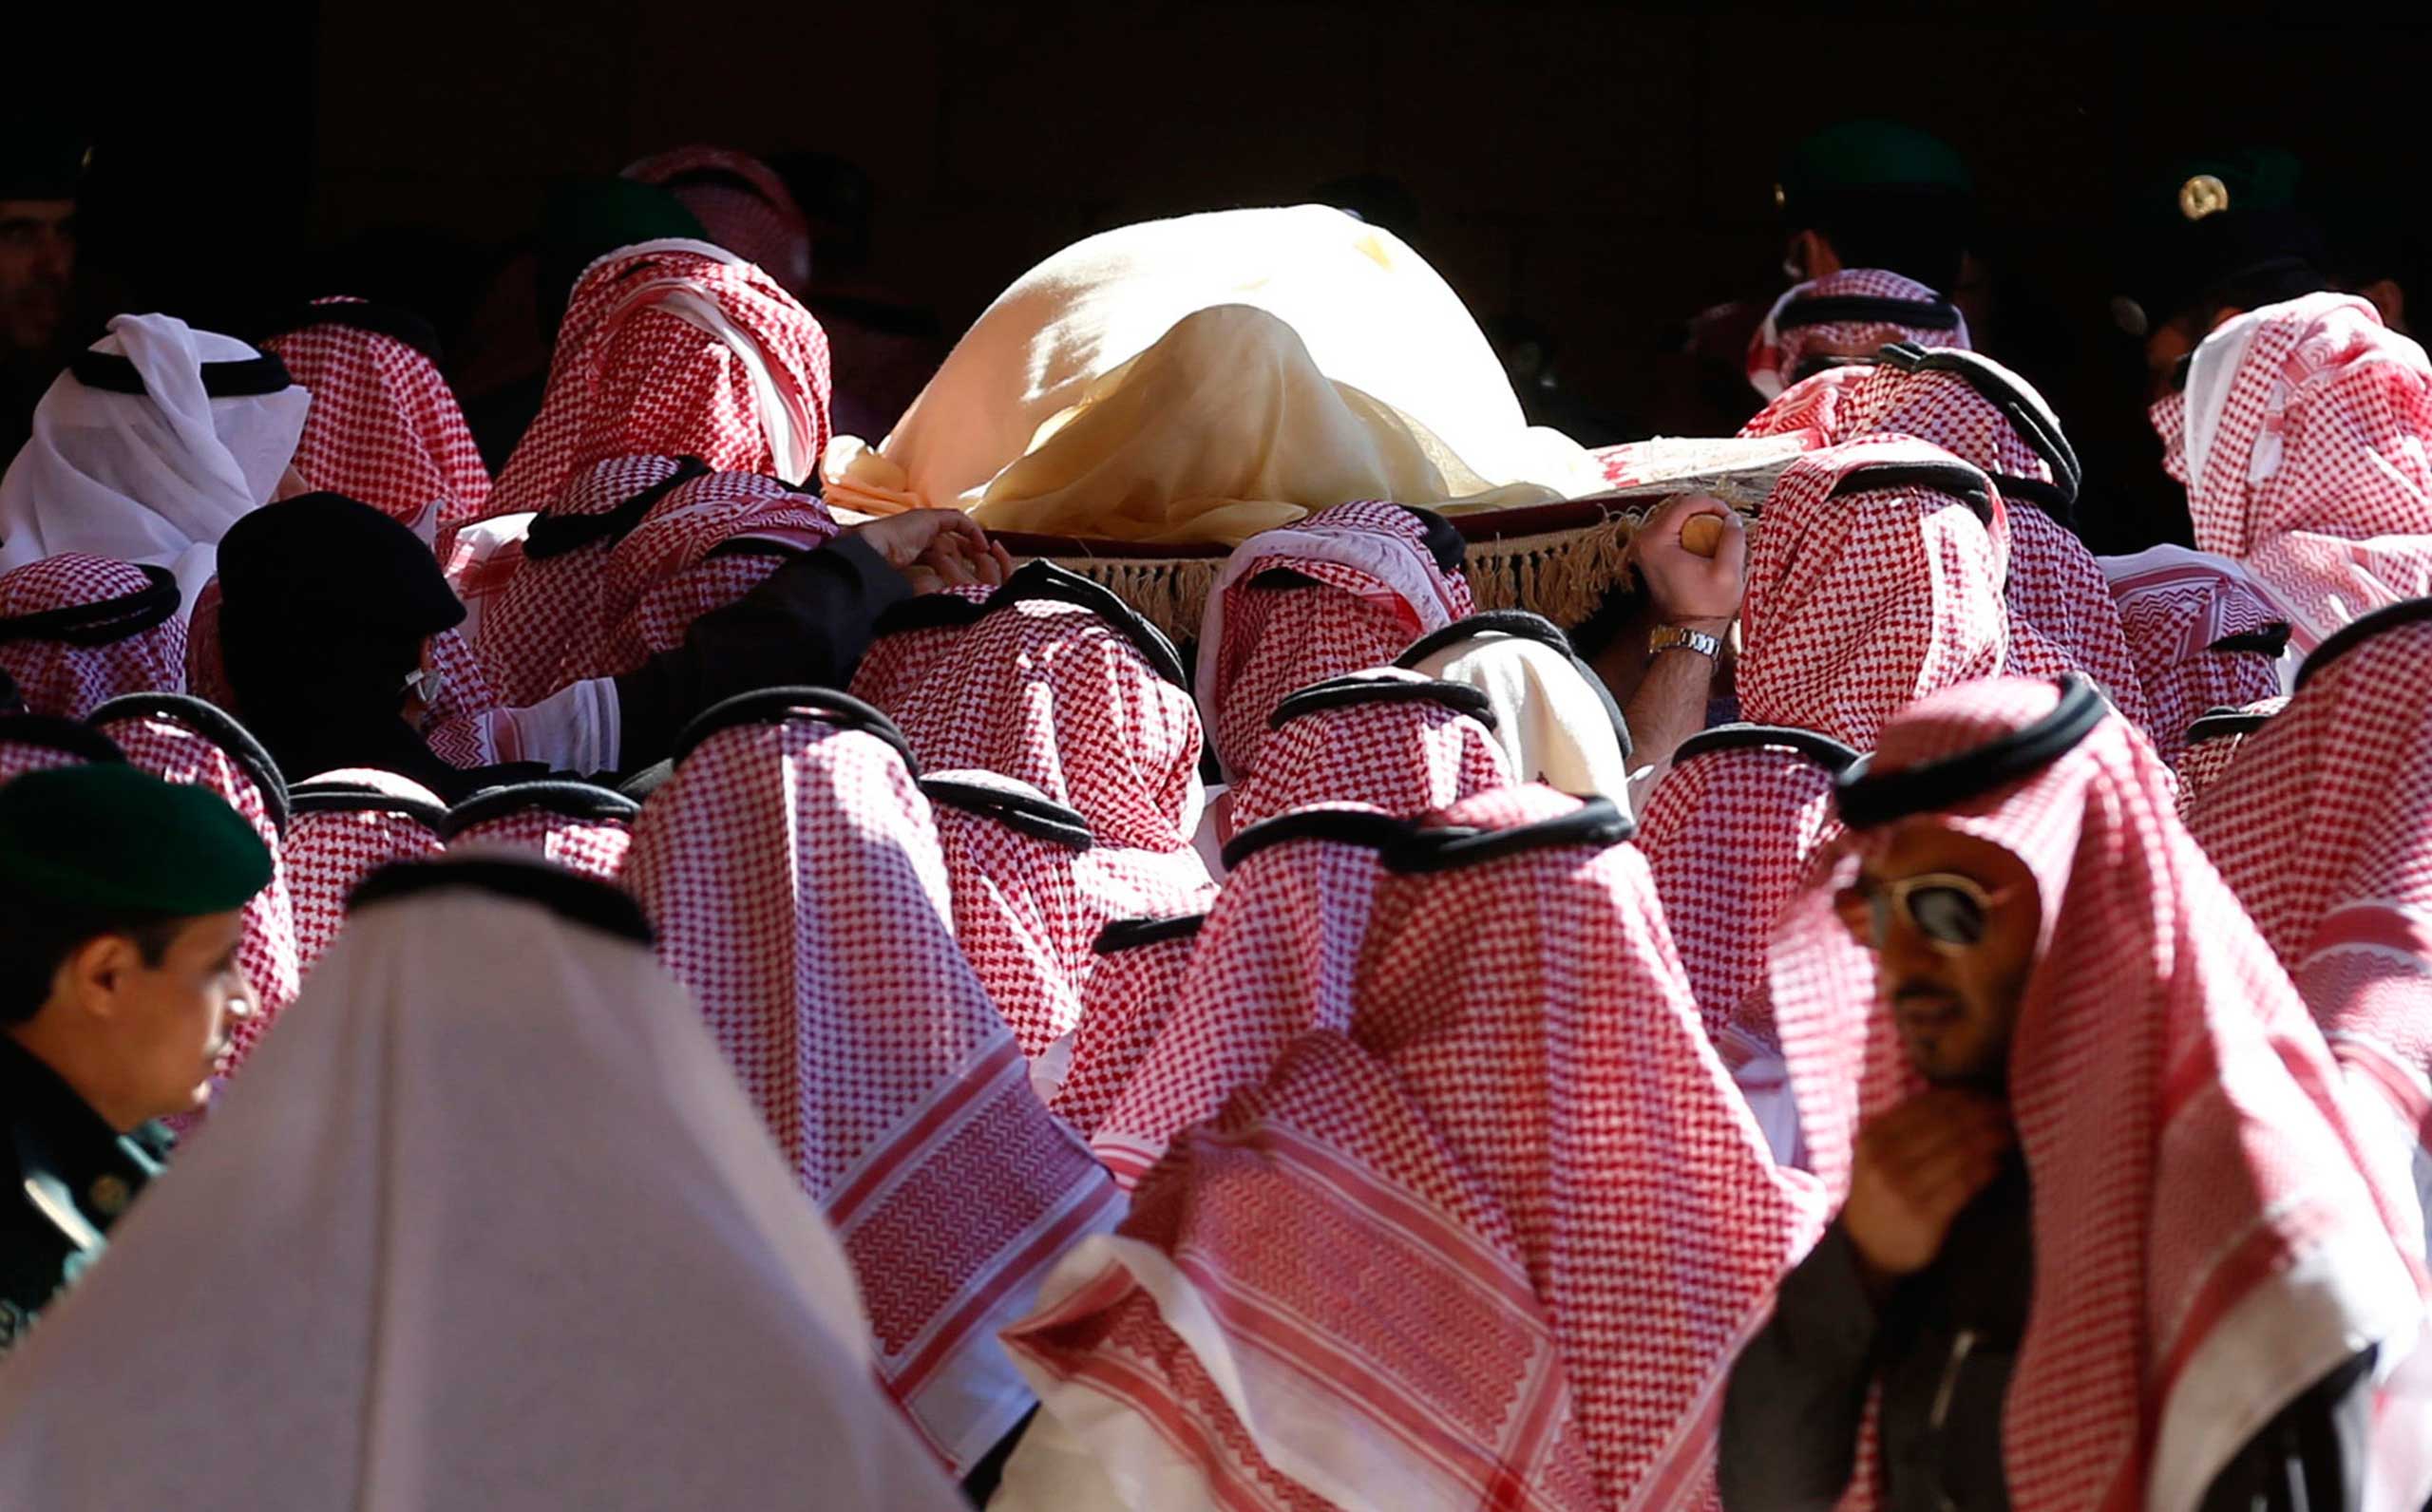 The body of Saudi King Abdullah bin Abdul Aziz is carried during his funeral at Imam Turki Bin Abdullah Grand Mosque, in Riyadh